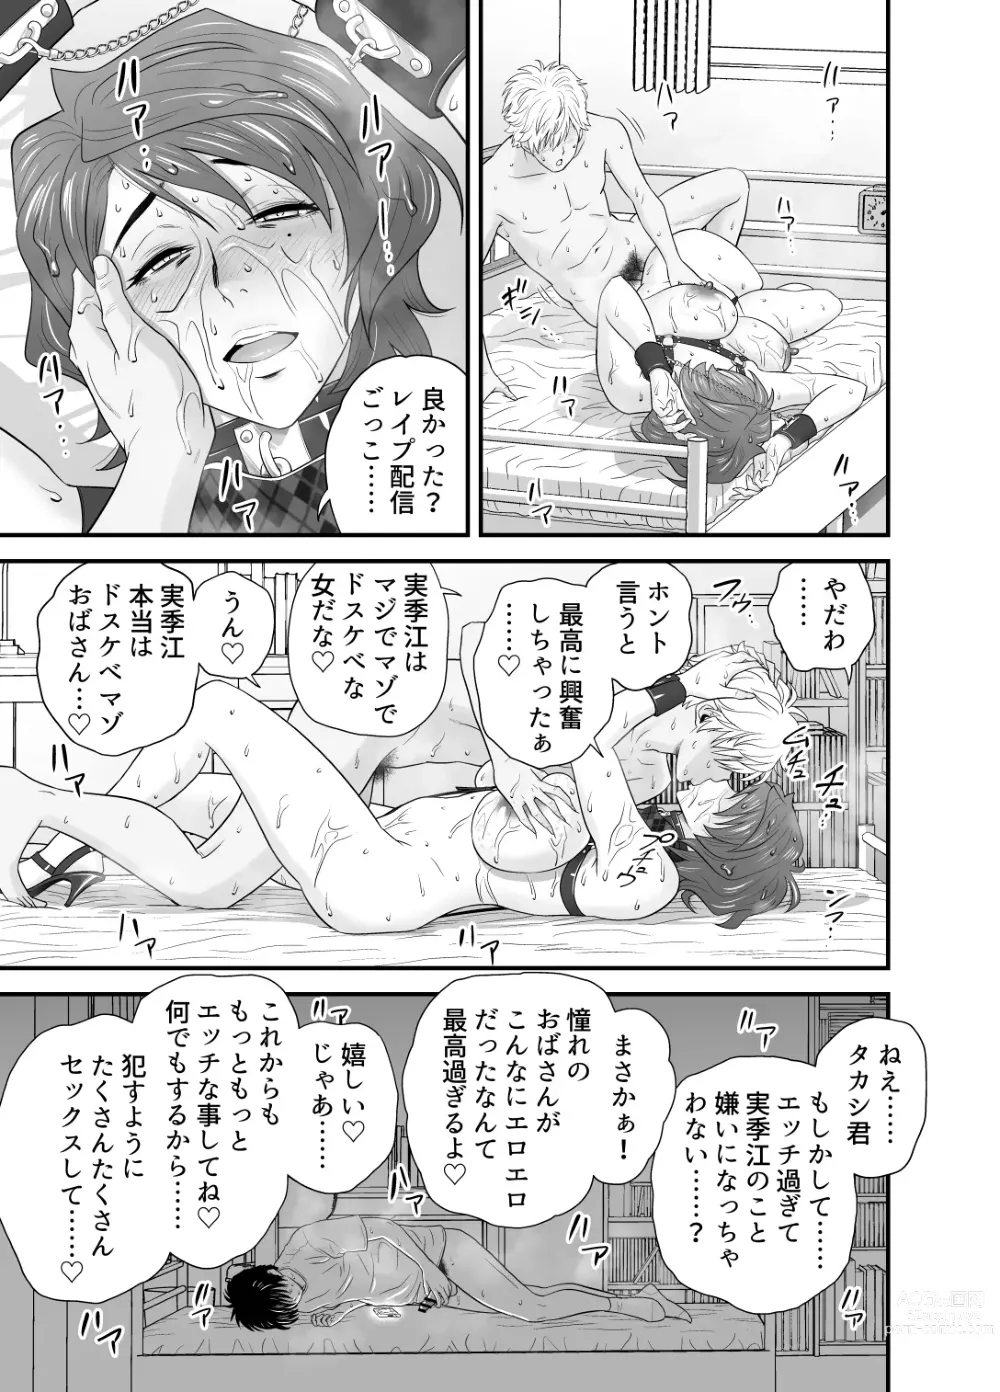 Page 53 of doujinshi My Motherfucking Friend 3